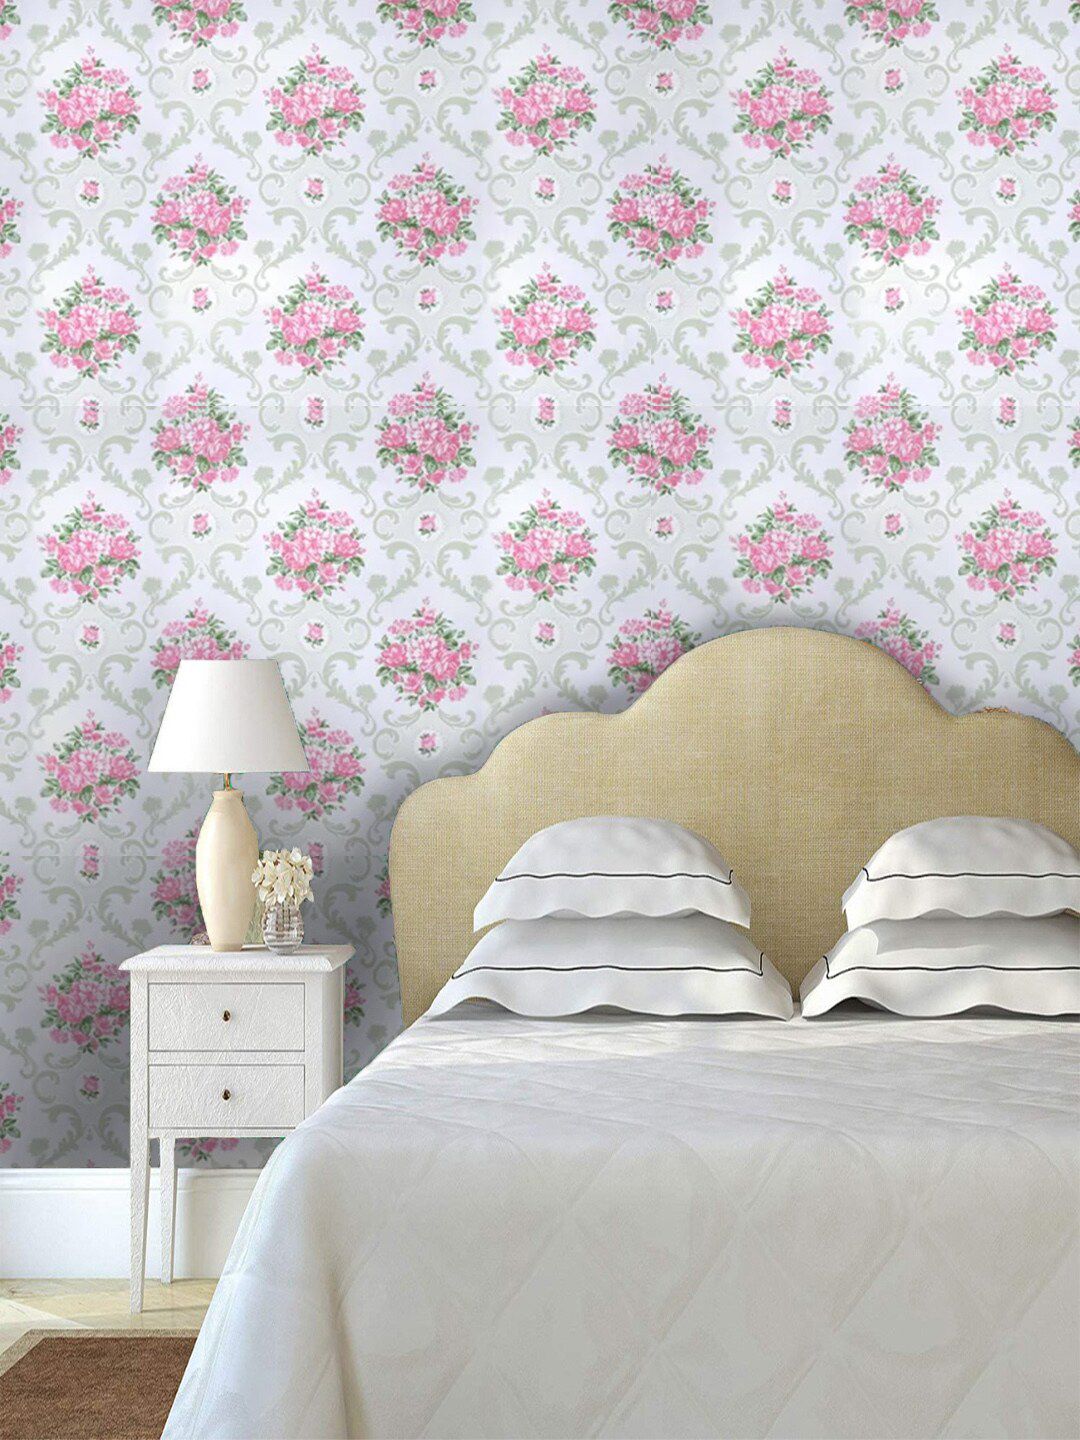 Jaamso Royals White & Pink Self-Adhesive & Waterproof Floral Wallpaper Price in India